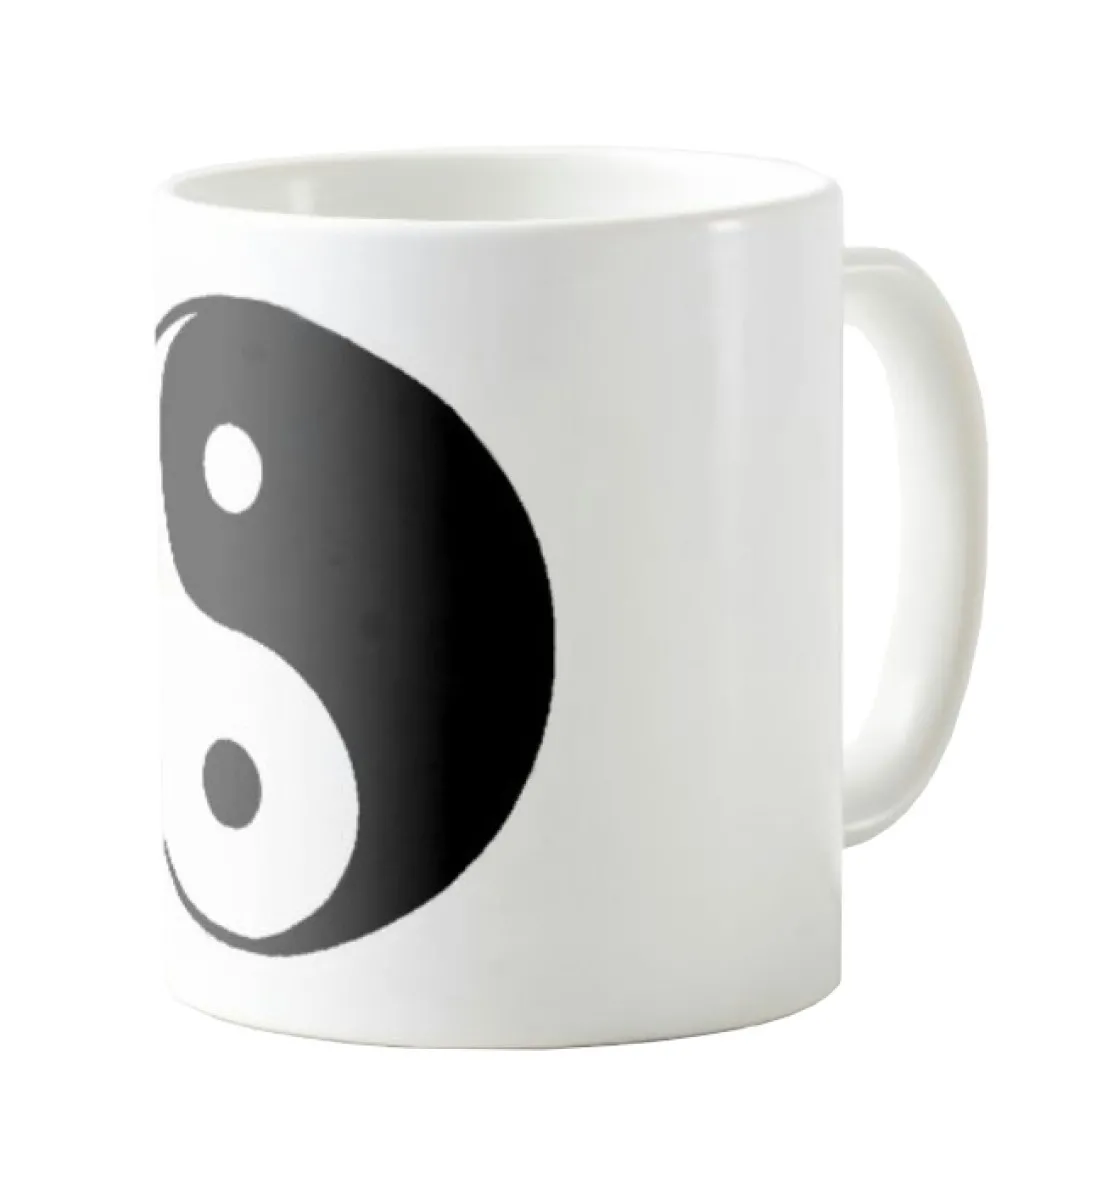 Mug - Coffee cup - Cup Ying Yang